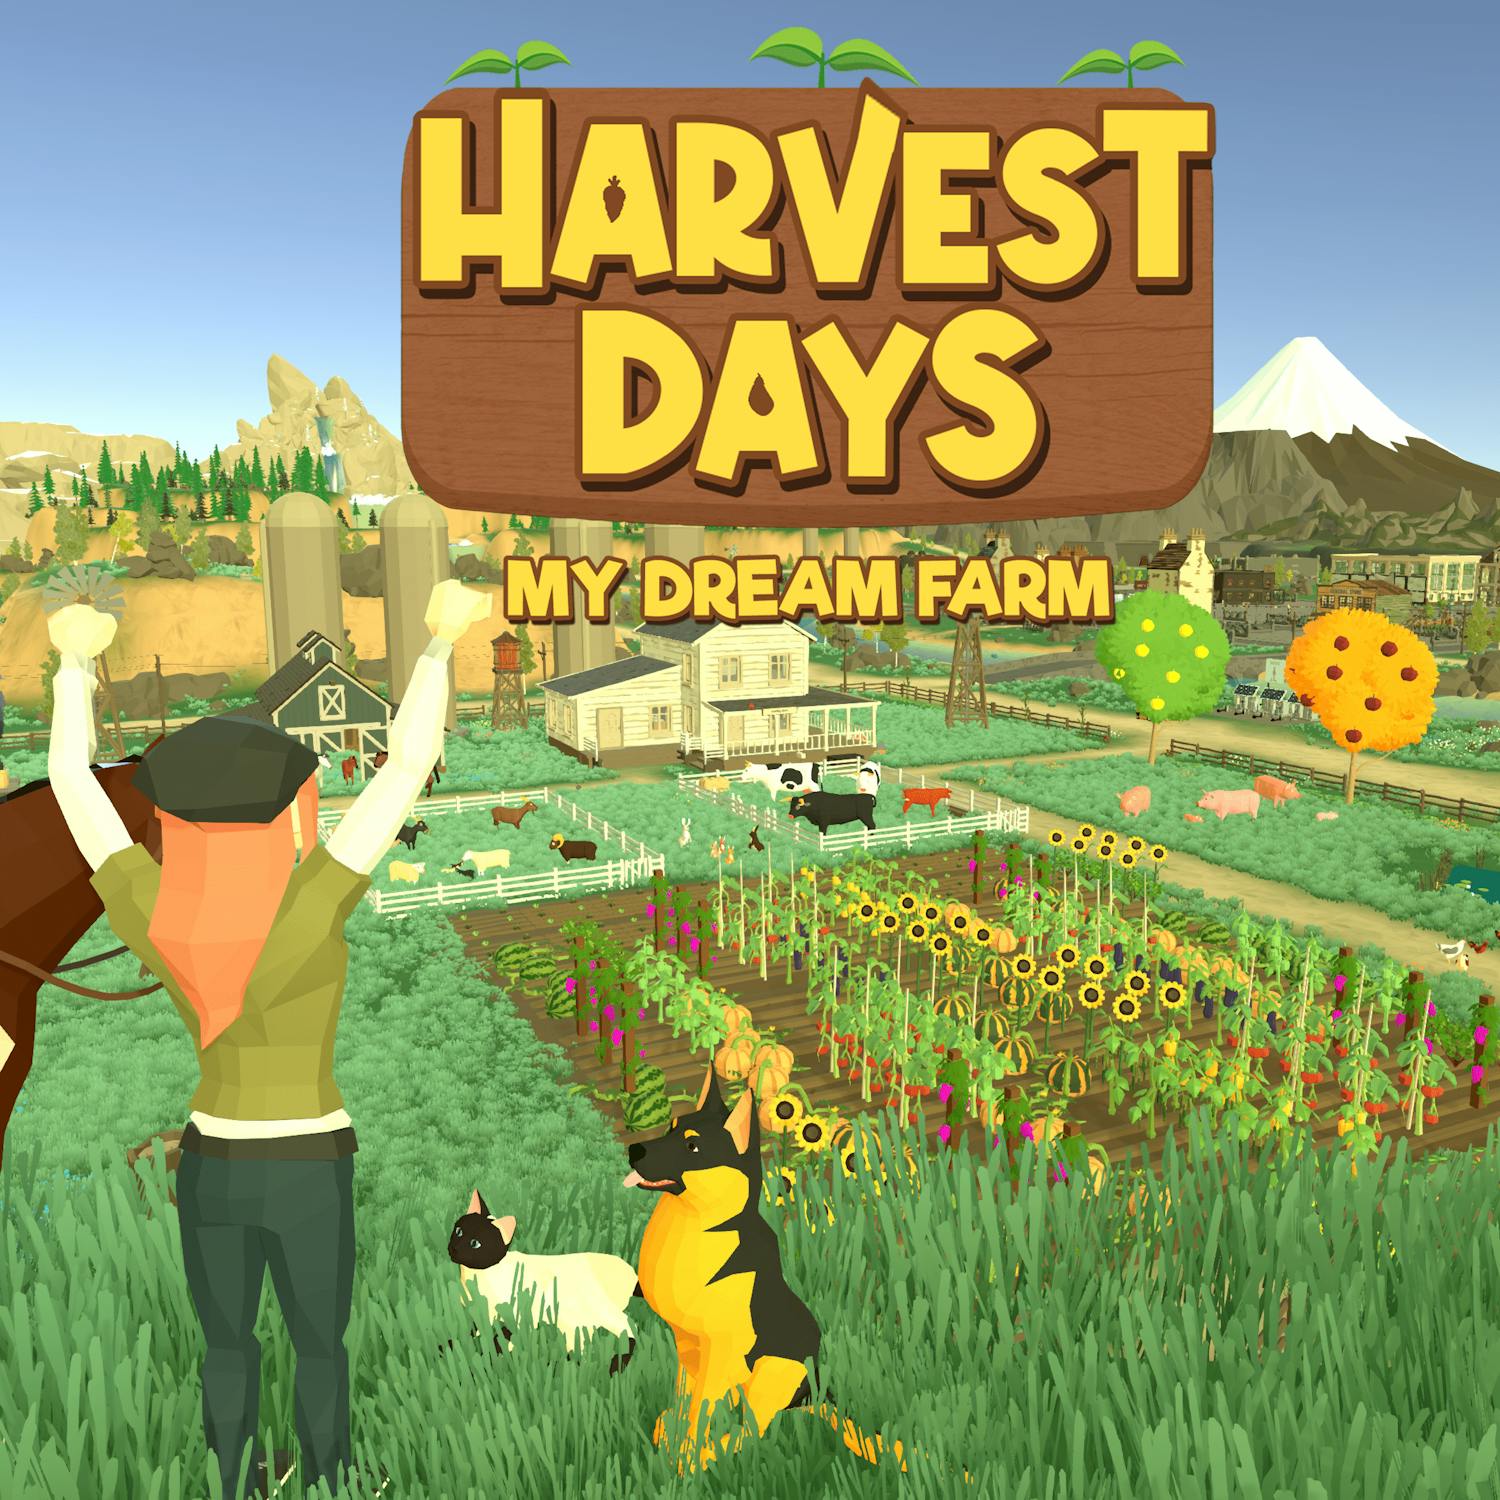 Harvest days